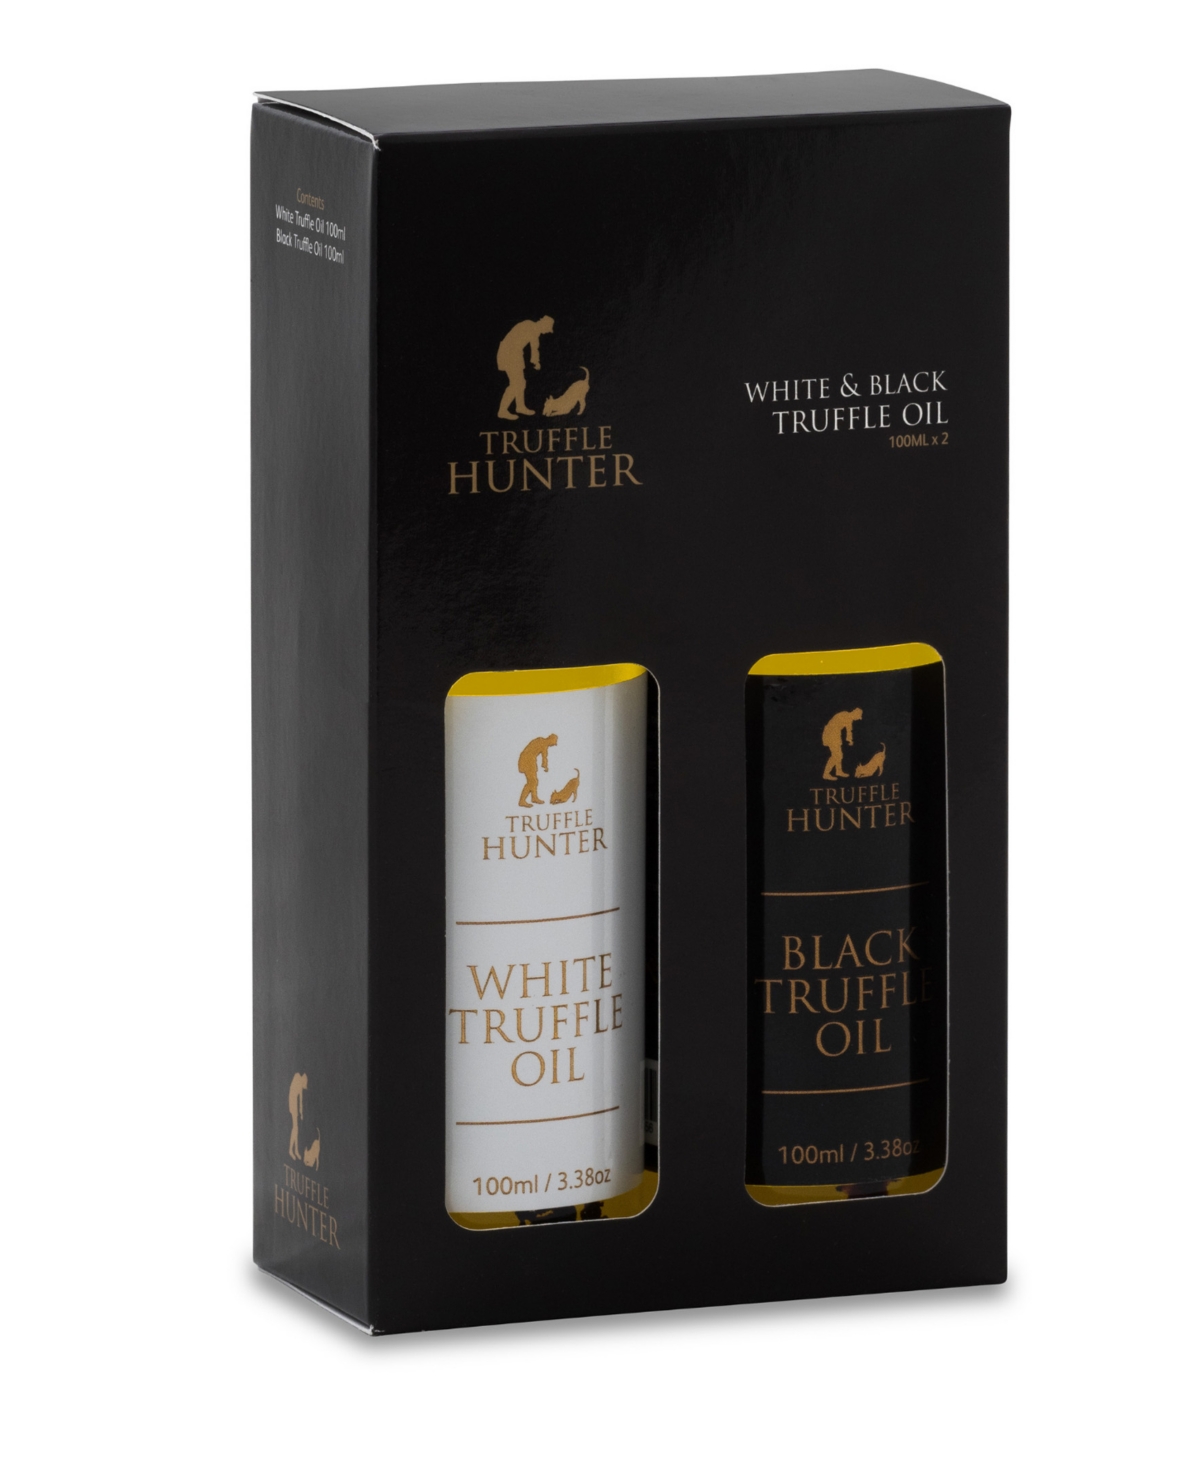 Trufflehunter White And Black Truffle Oil Gift Selection In No Color